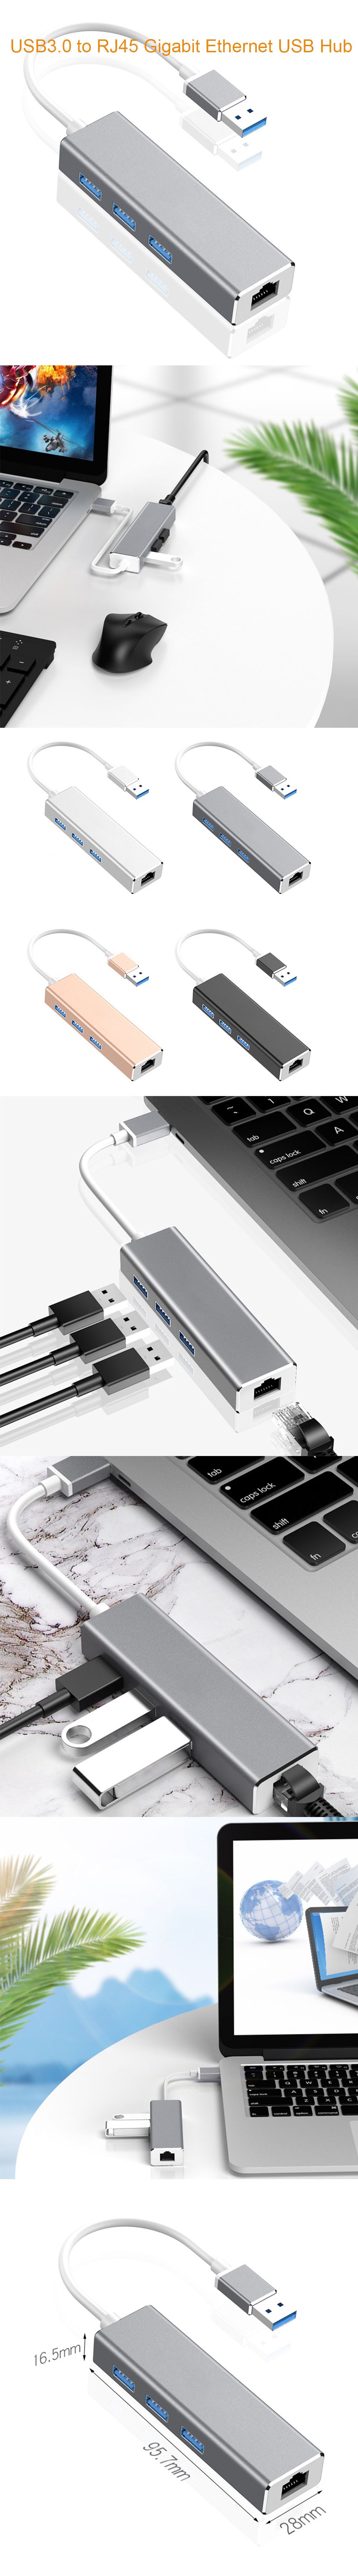 HOWEI-HW-1505-USB30-to-RJ45-Gigabit-Ethernet-USB-Hub-Aluminum-Alloy-with-1000Mbps-Network-Port-Exten-1592626